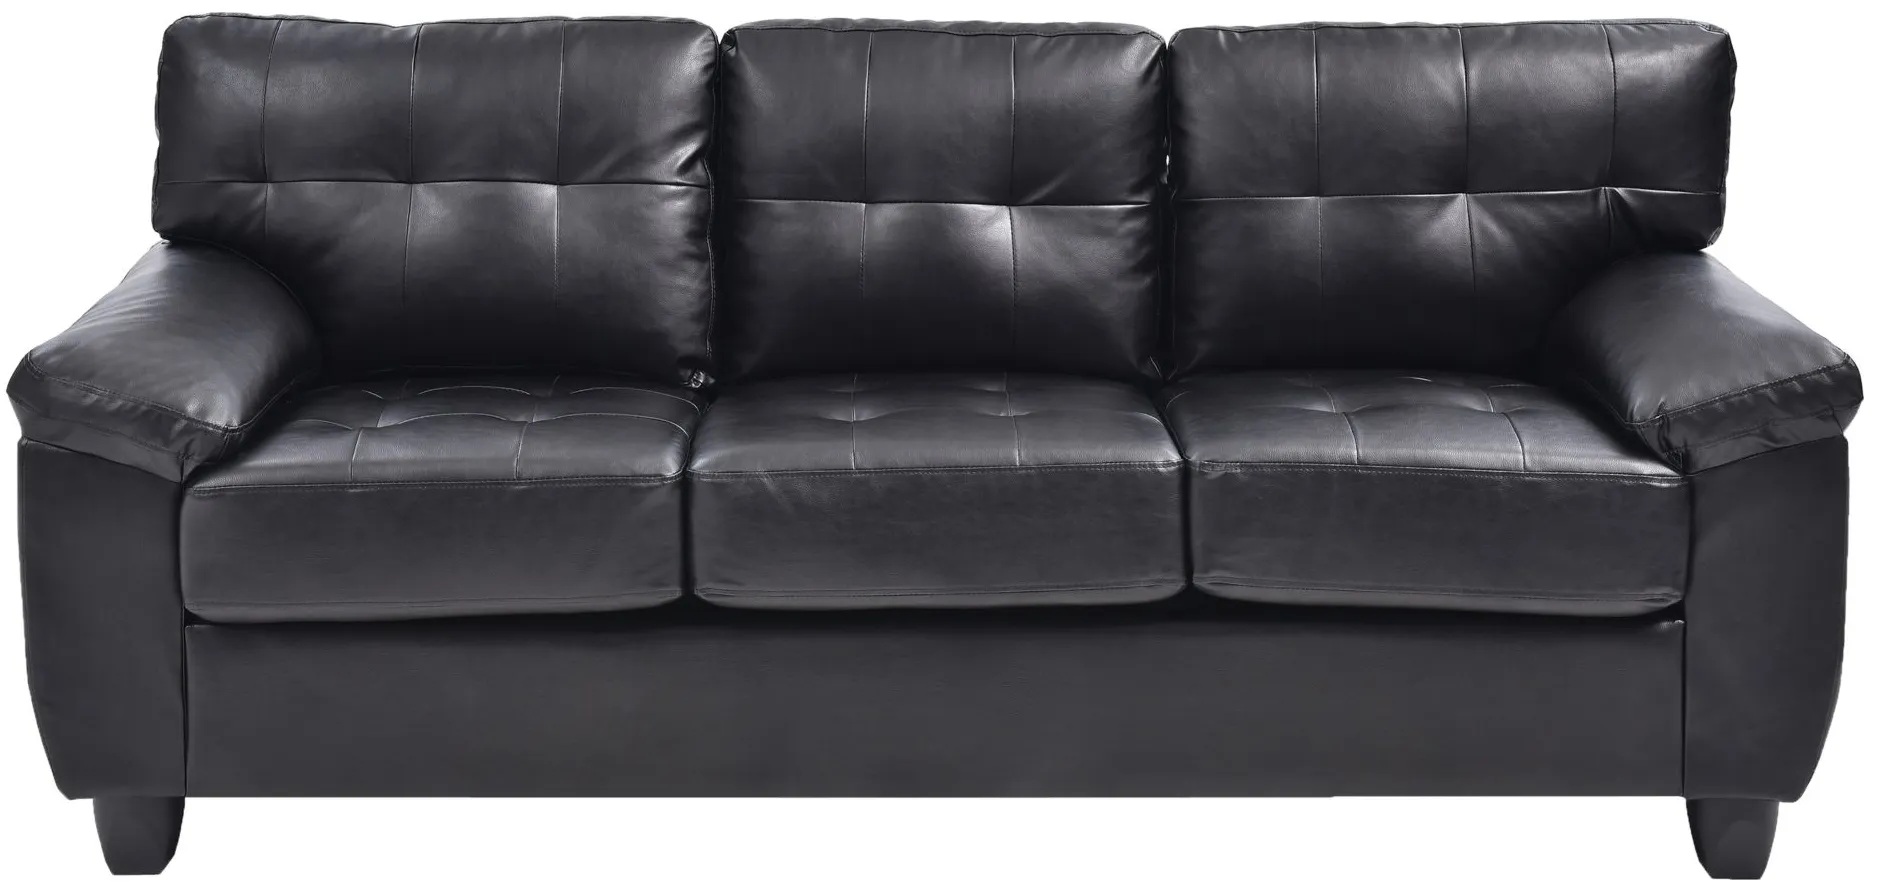 Gallant Sofa in Black by Glory Furniture